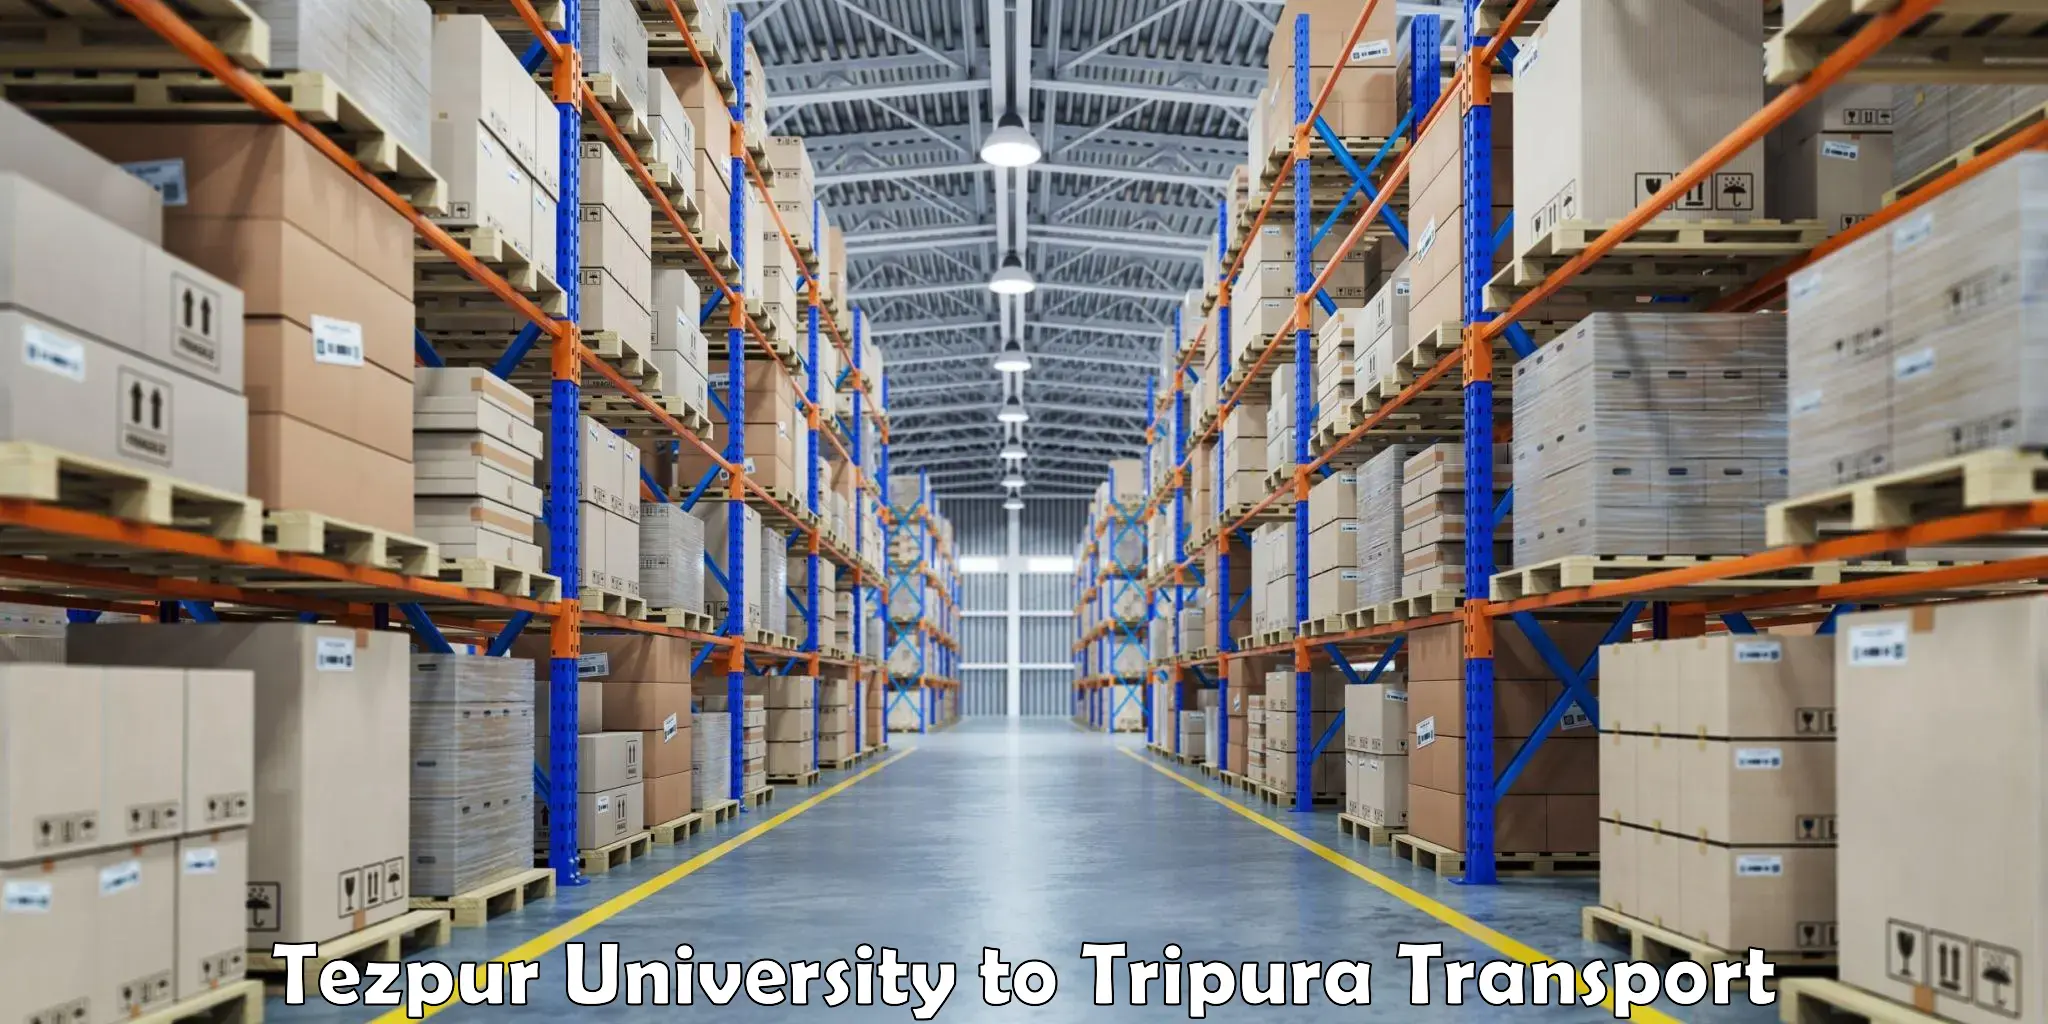 Delivery service Tezpur University to Agartala